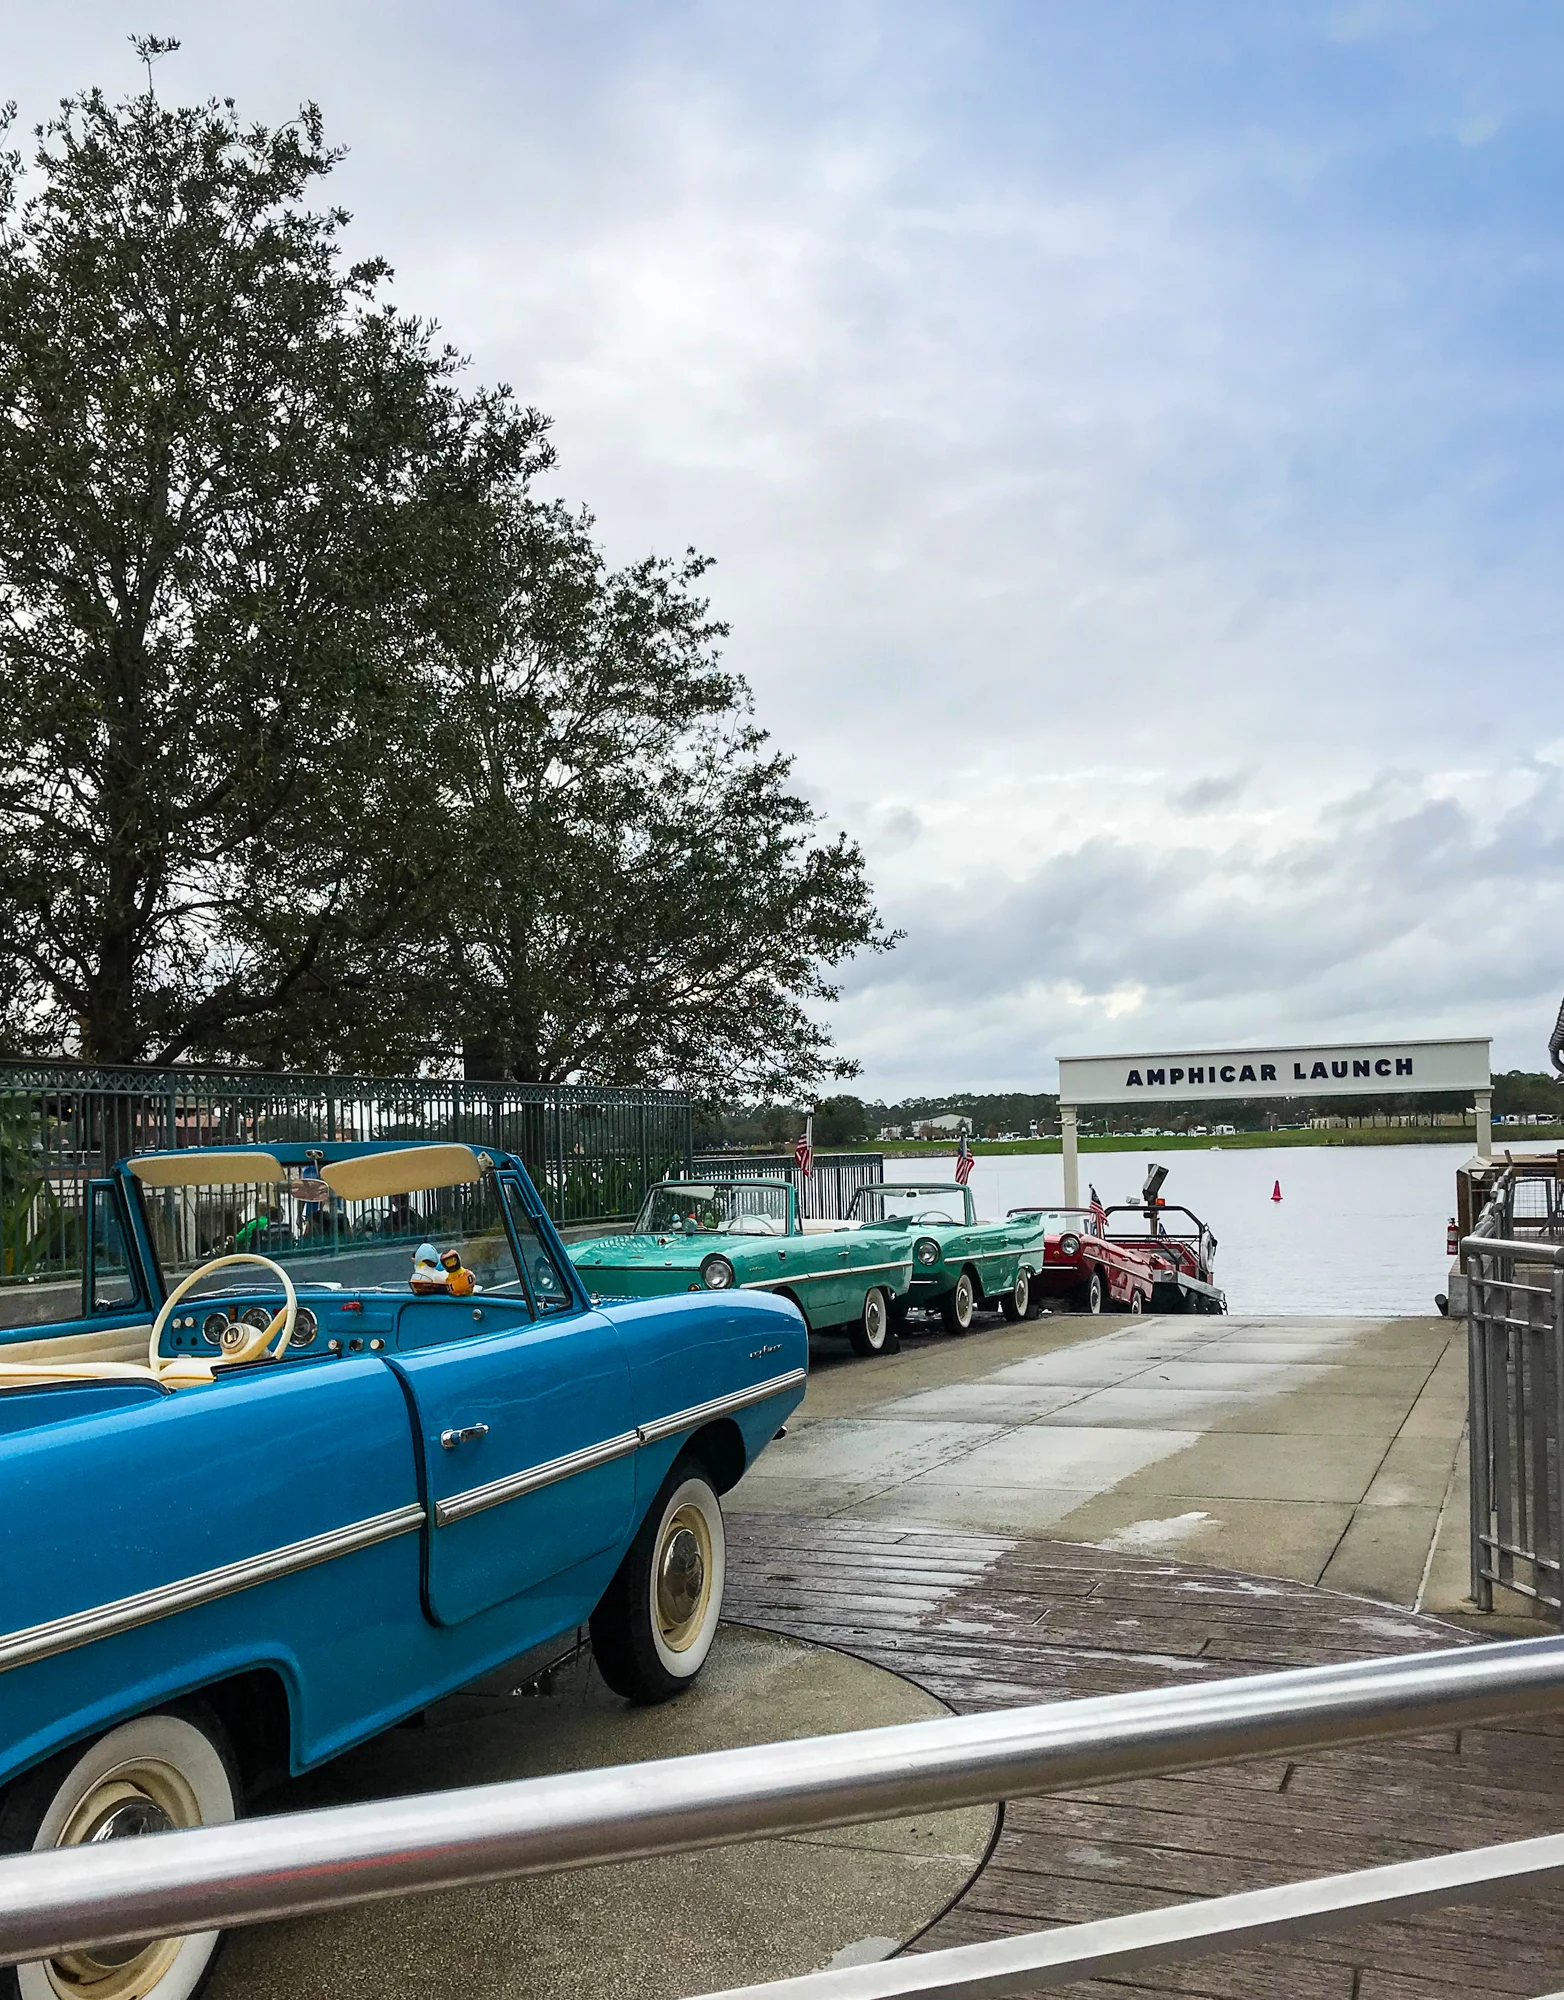 Amphicar boats at Disney Springs